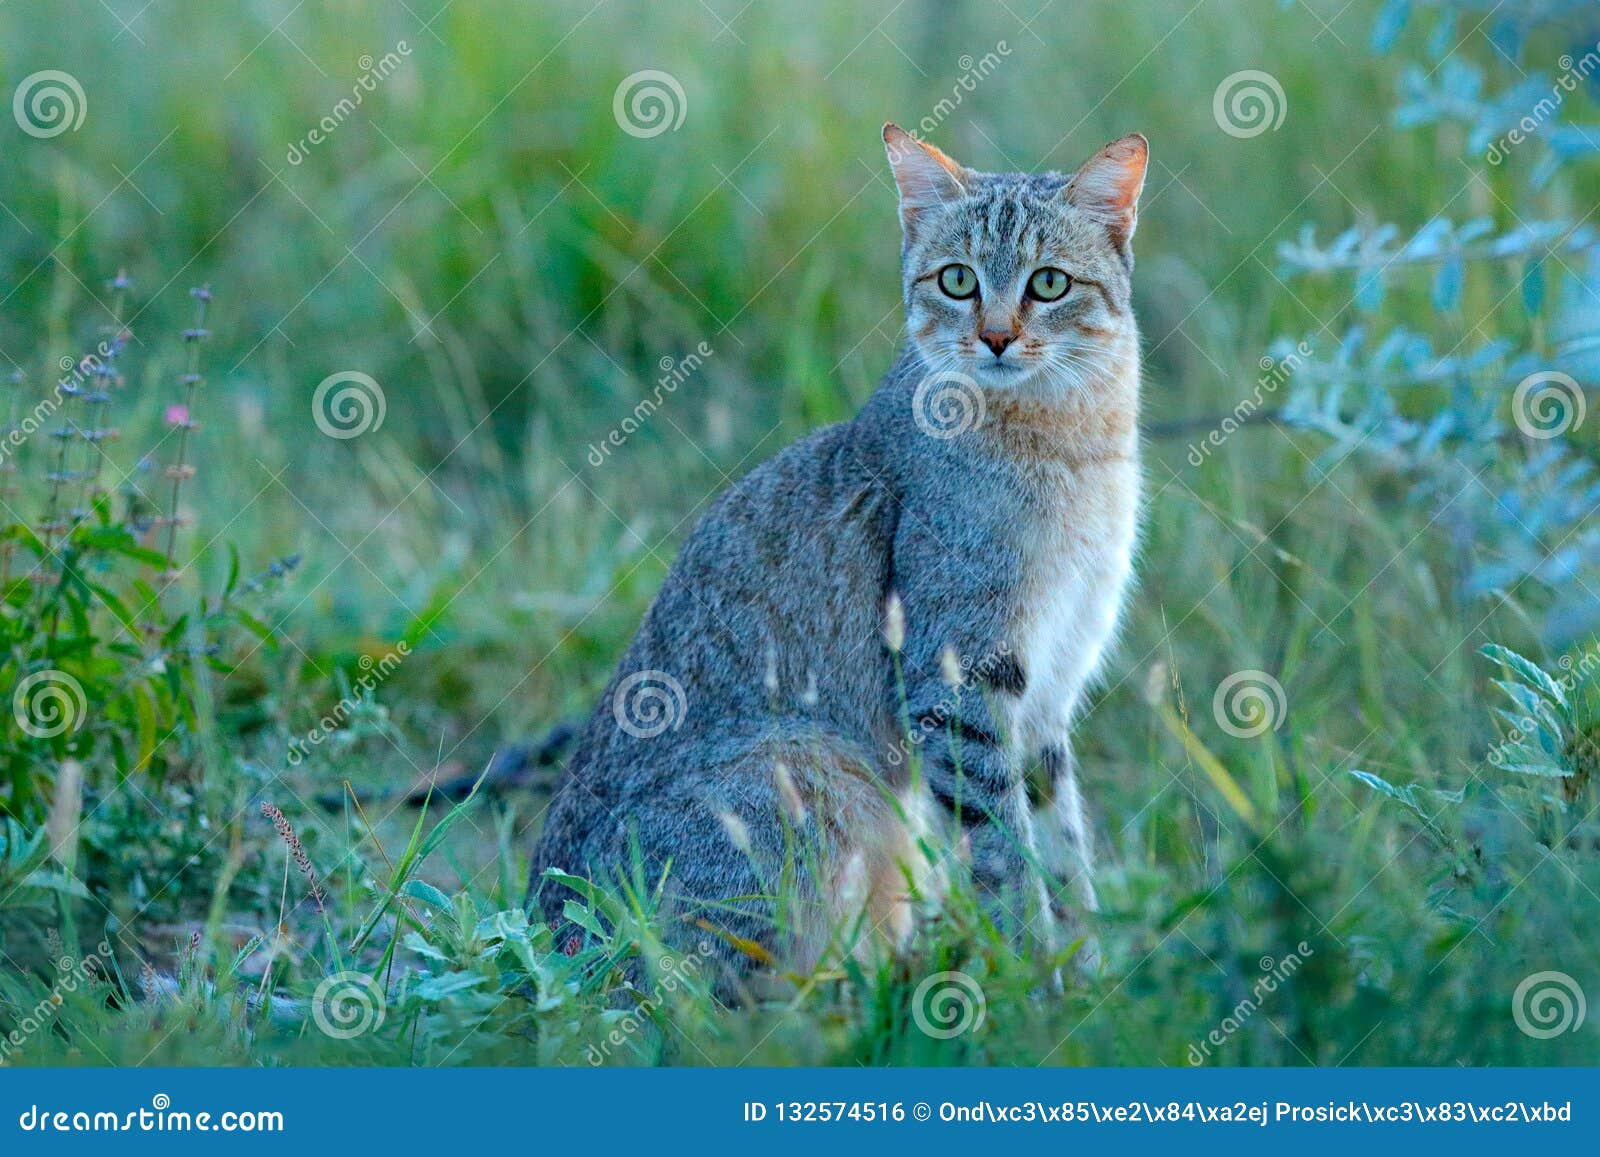 african wildcat, felis lybica, also called near eastern wild cat. wild animal in nature habitat, grass meadow, nxai pan national